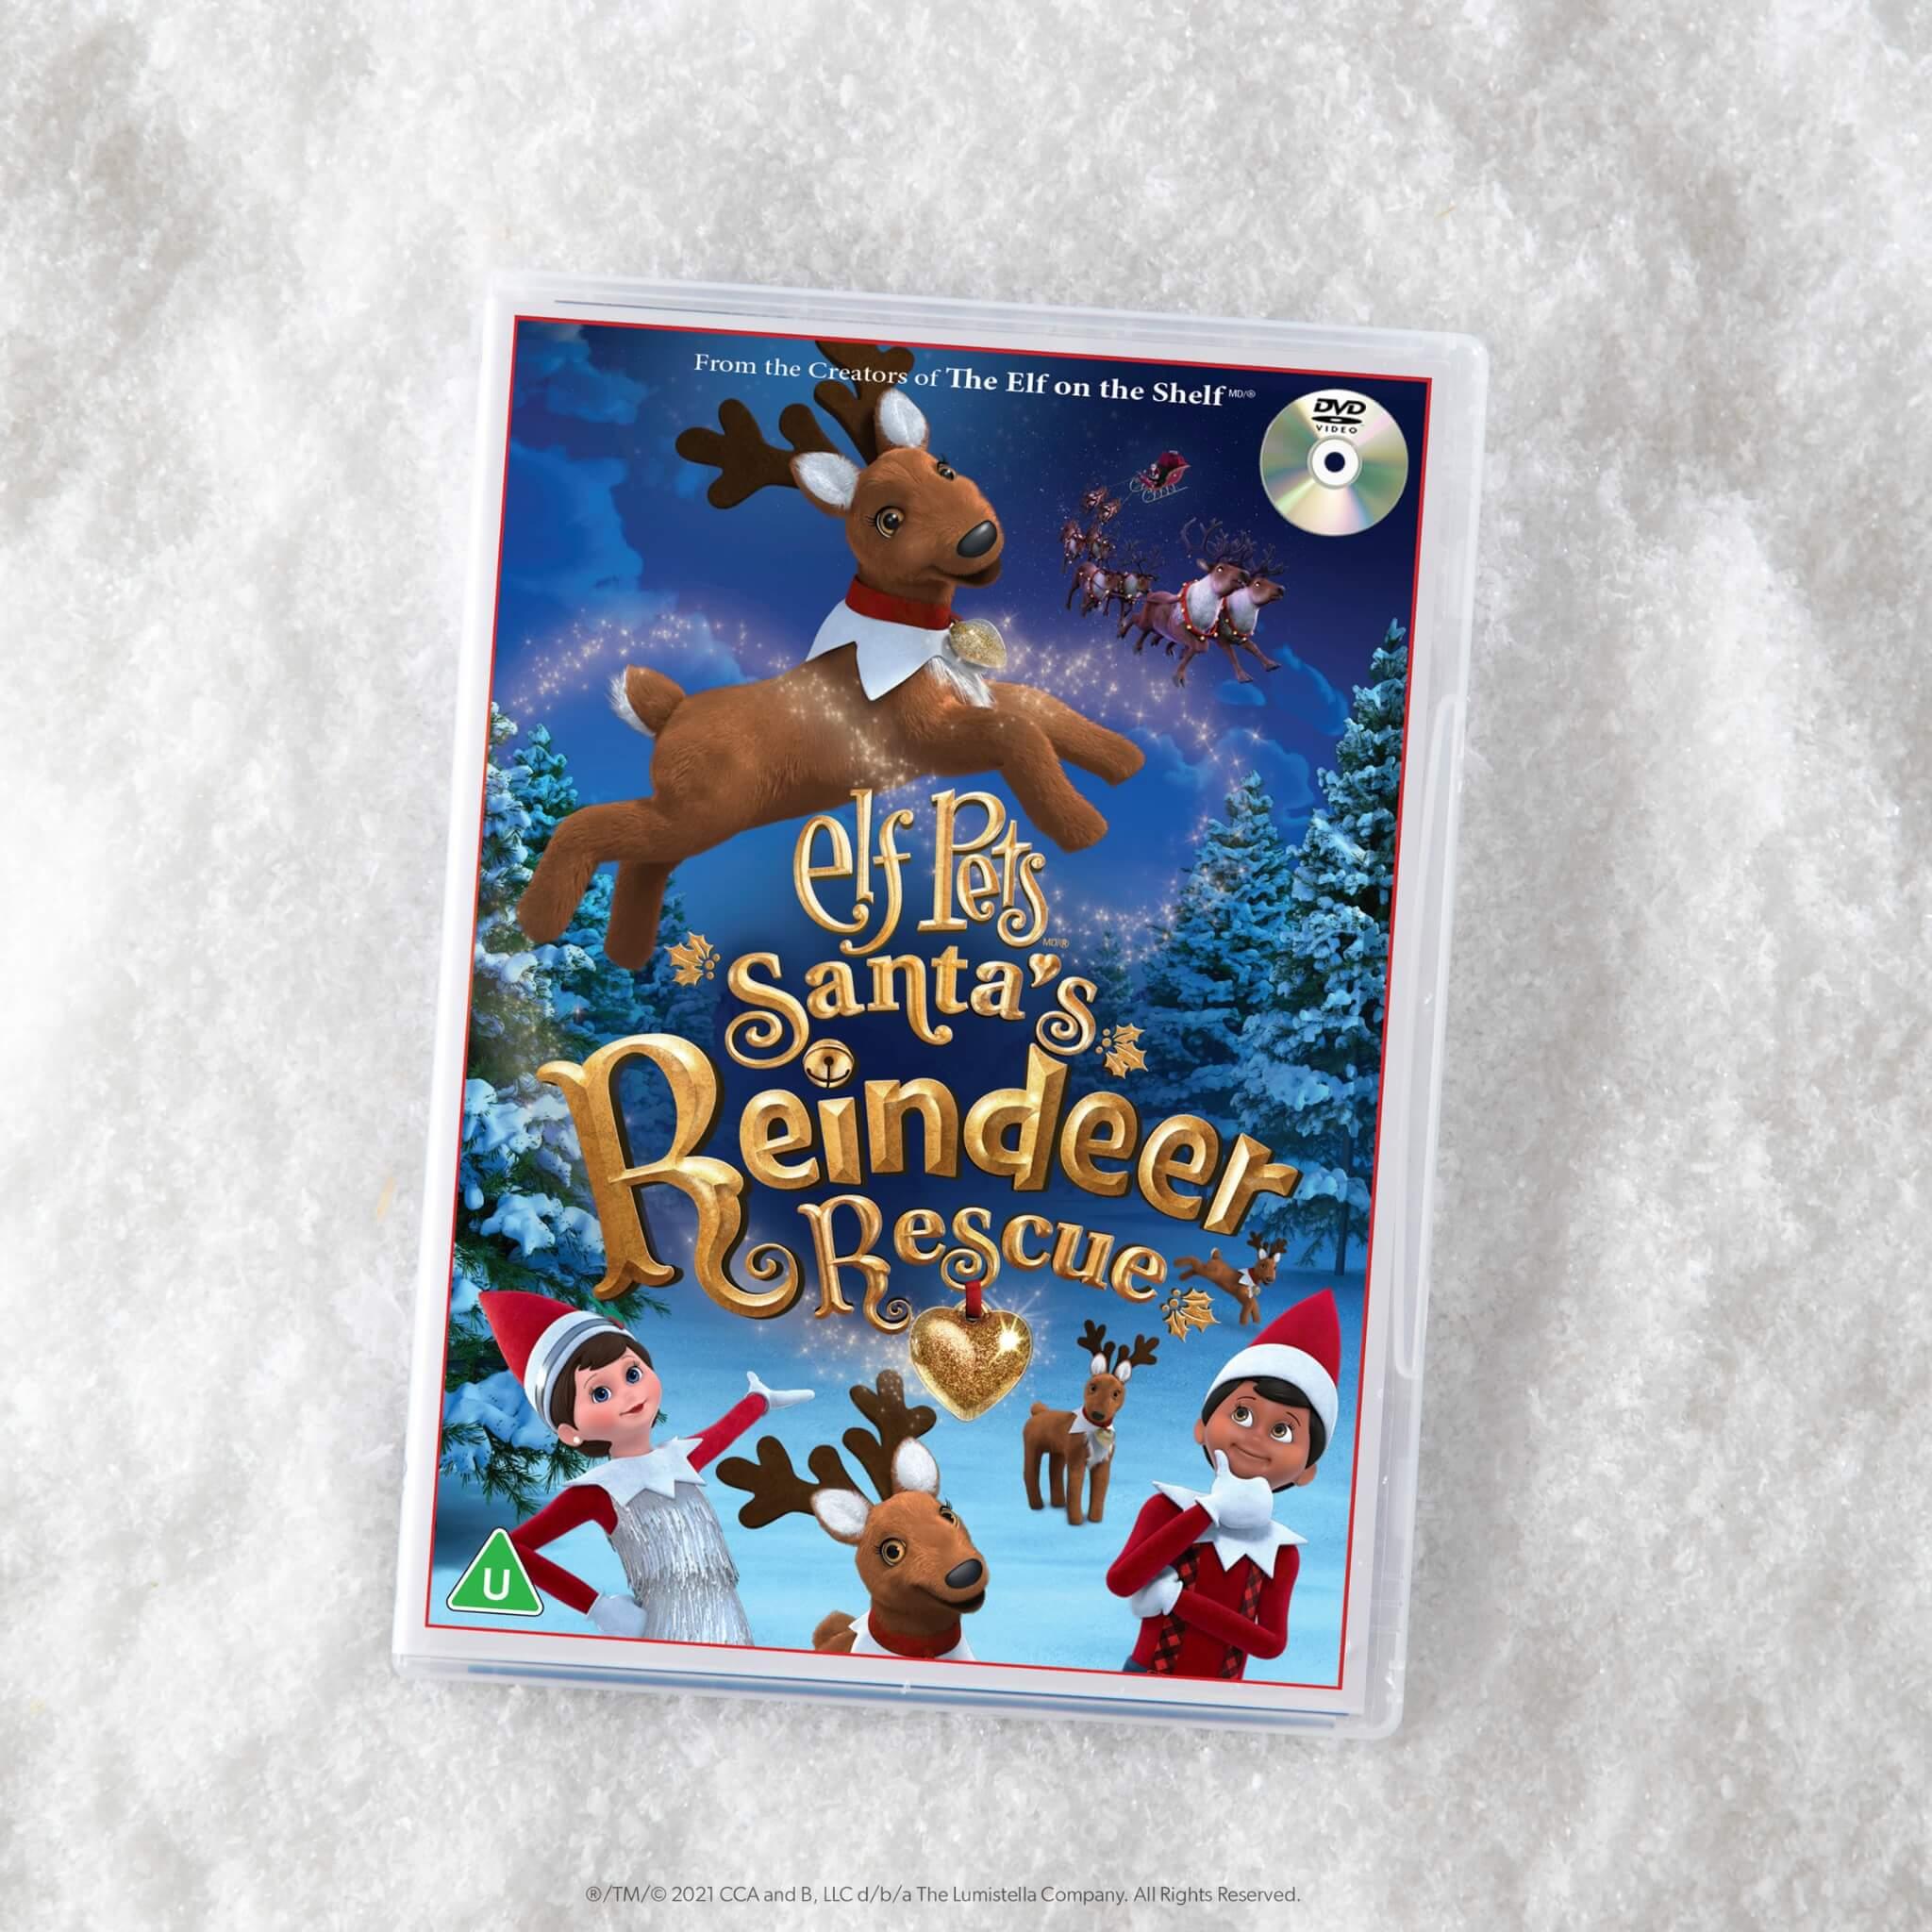 Elf Pets®: Santa's Reindeer Rescue DVD - The Elf on The Shelf